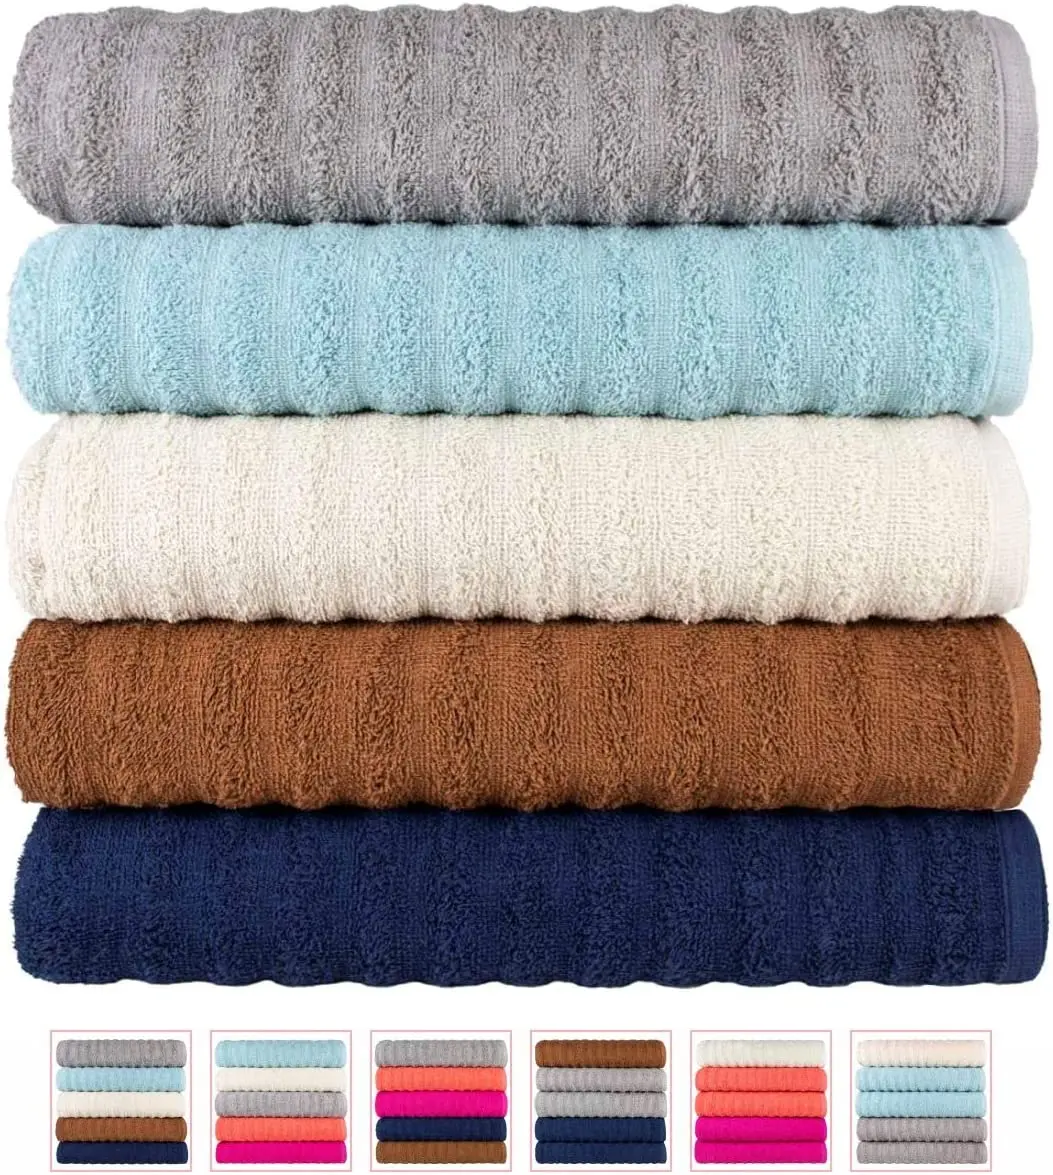 

car wash Kit 5 Super Absorption Giant Soft Bath Towels - Ocean (KIT 3) Microfiber Towels Bathroom Hotel Bath Towels For Thicken